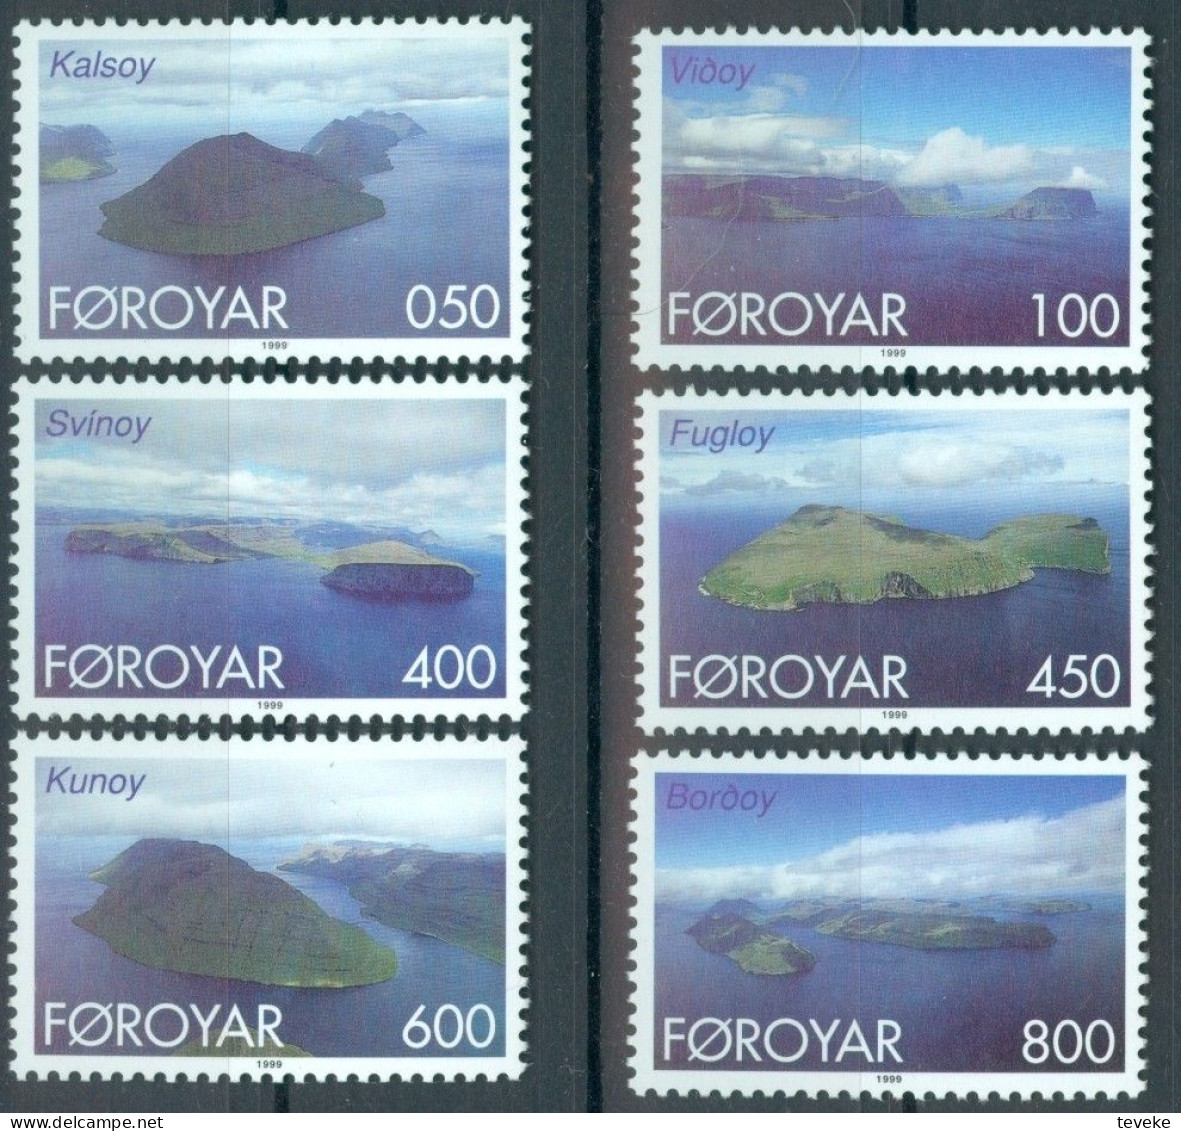 FAEROËR 1999 - MiNr. 356/361 - **/MNH - Tourism - Various Faroe Islands - Faeroër